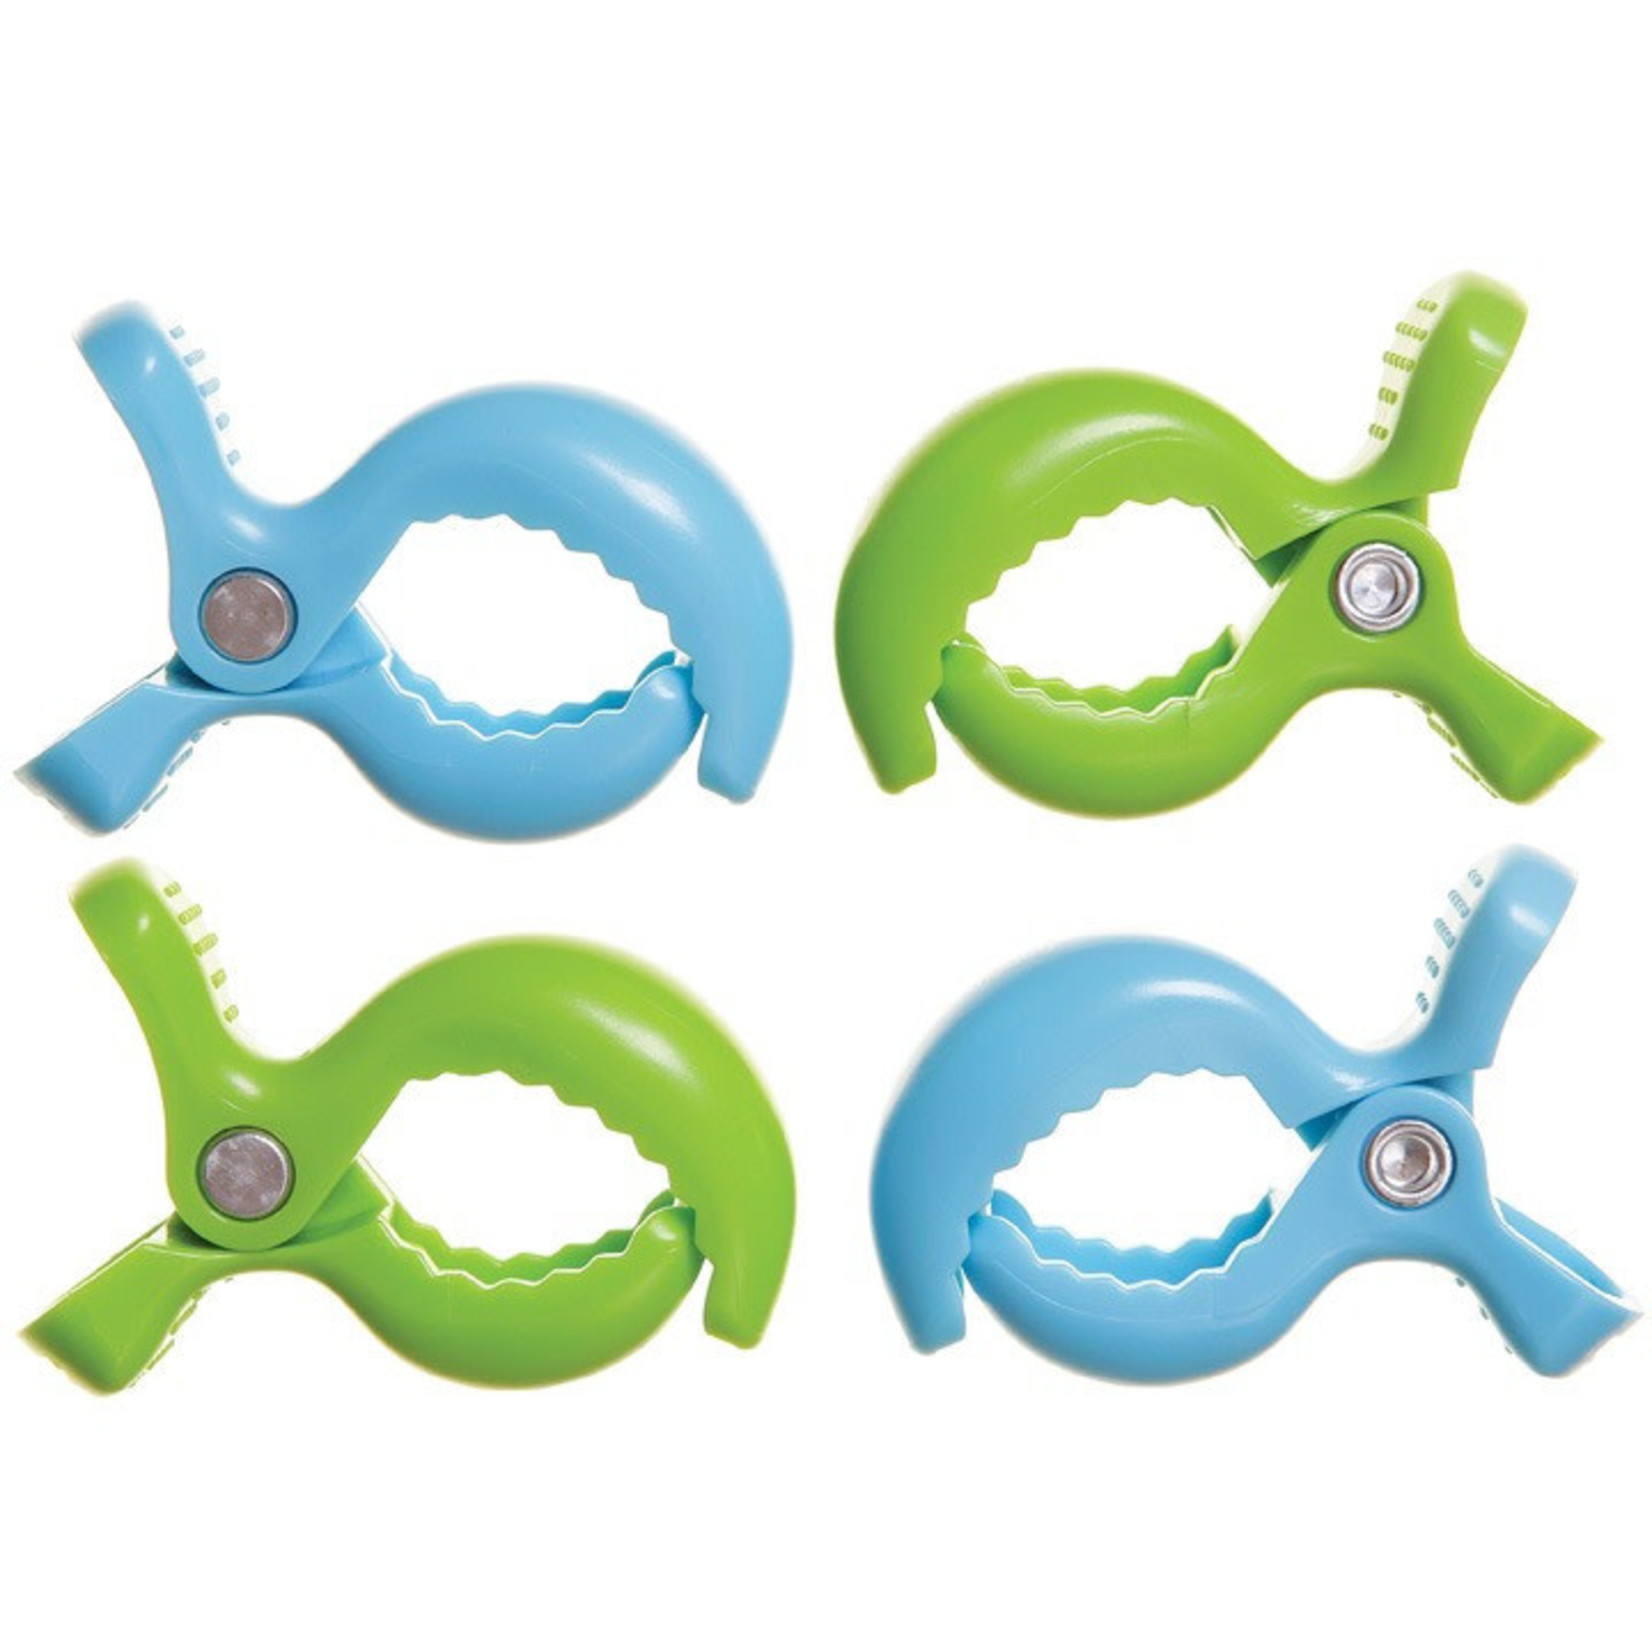 Dreambaby STROLLER CLIPS 4PK - BLUE/GREEN